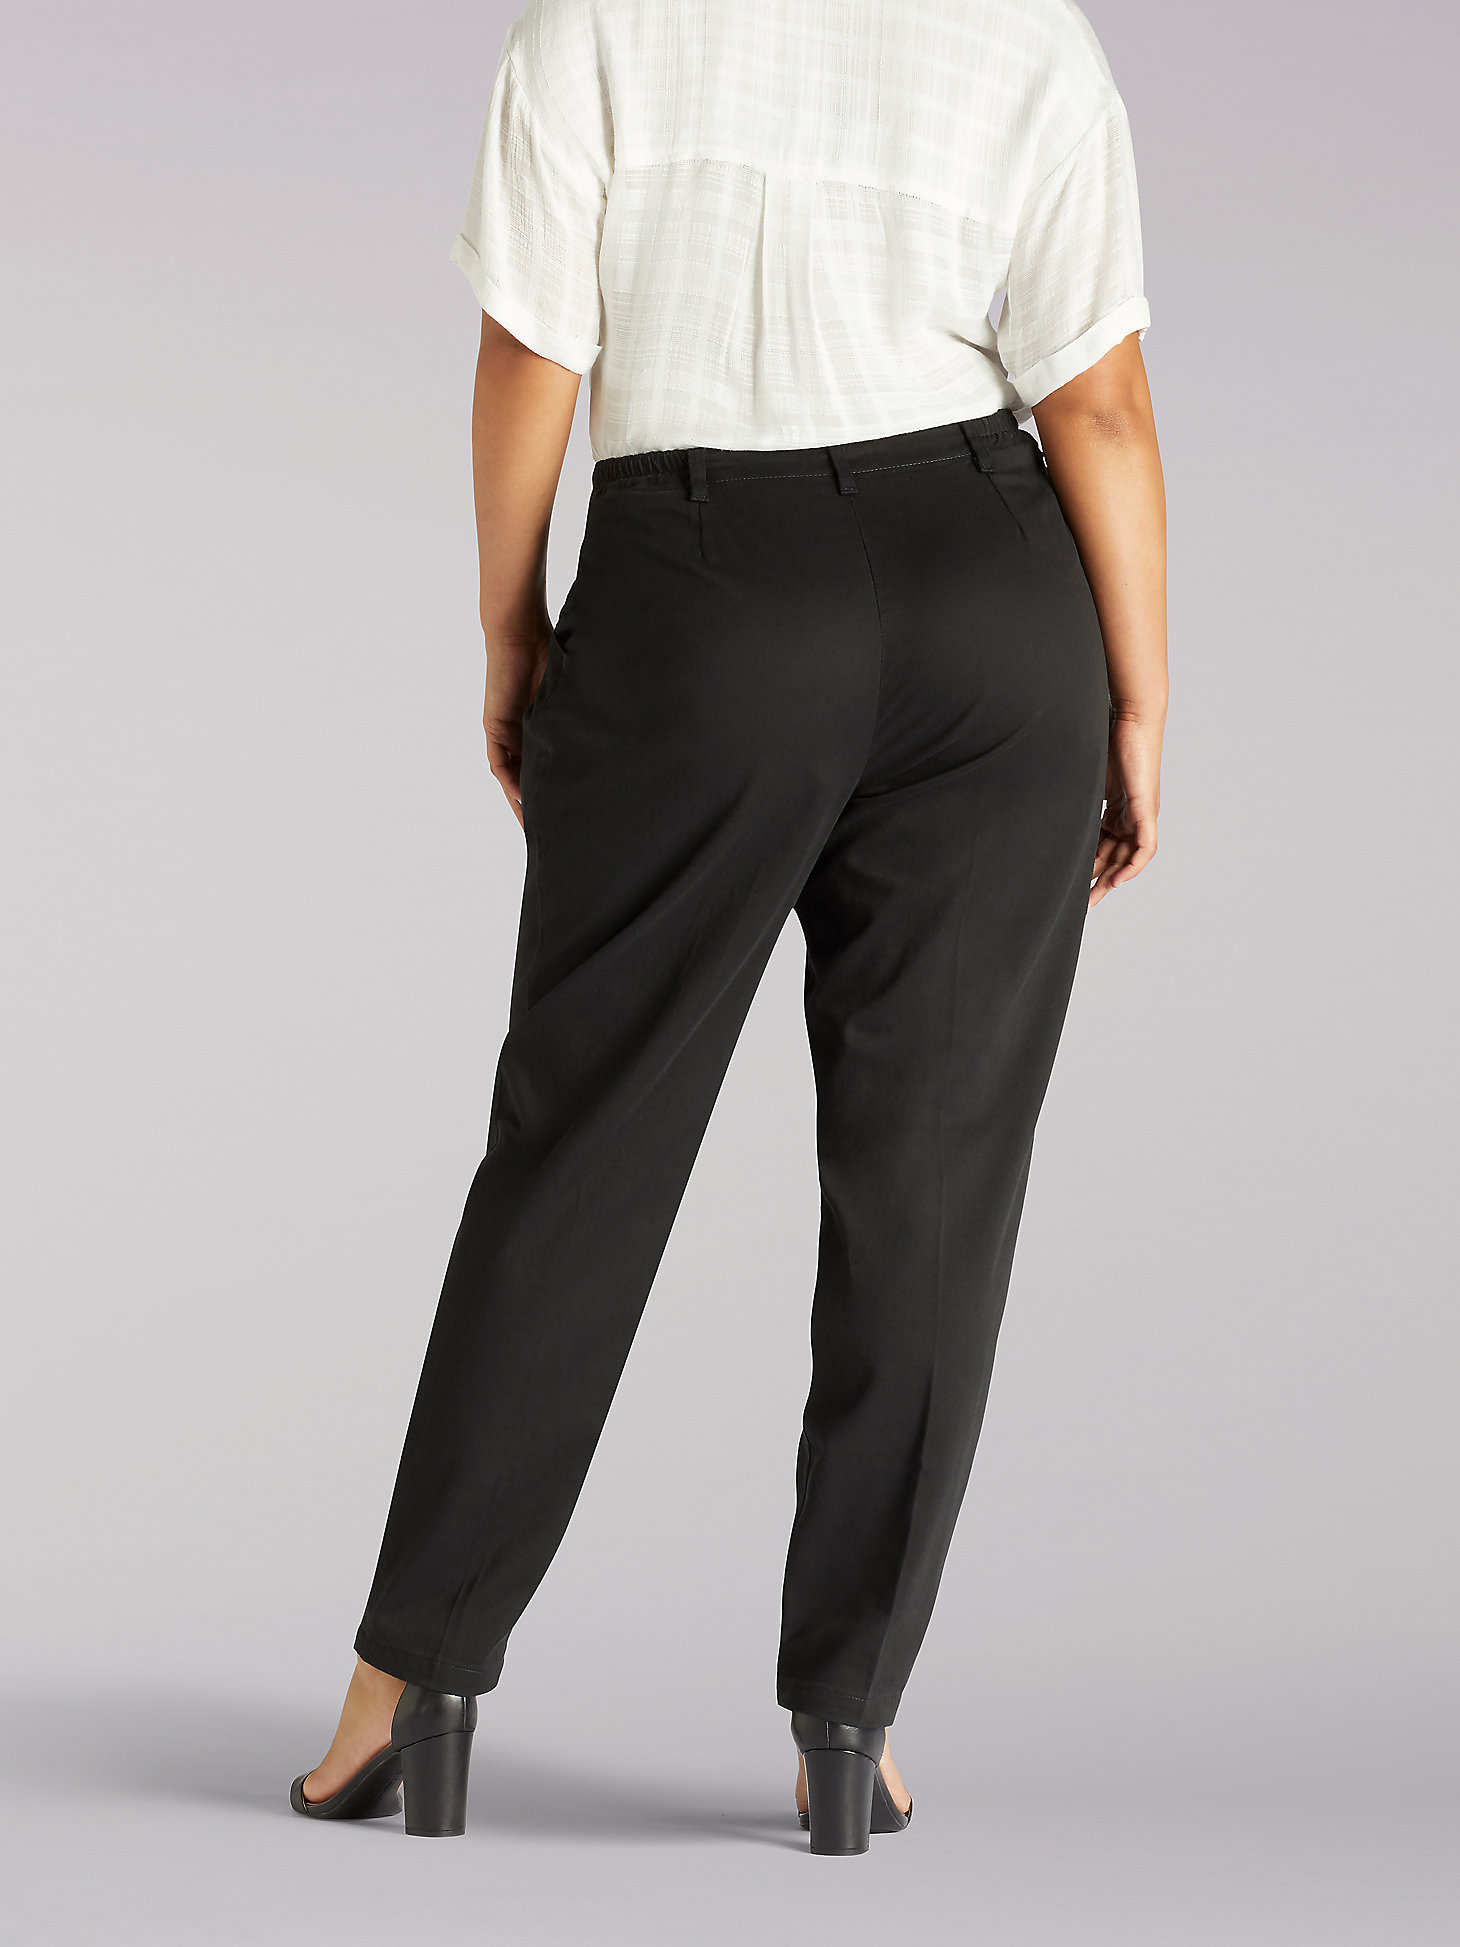 Women’s Side Elastic Pants (Plus) in Black alternative view 1